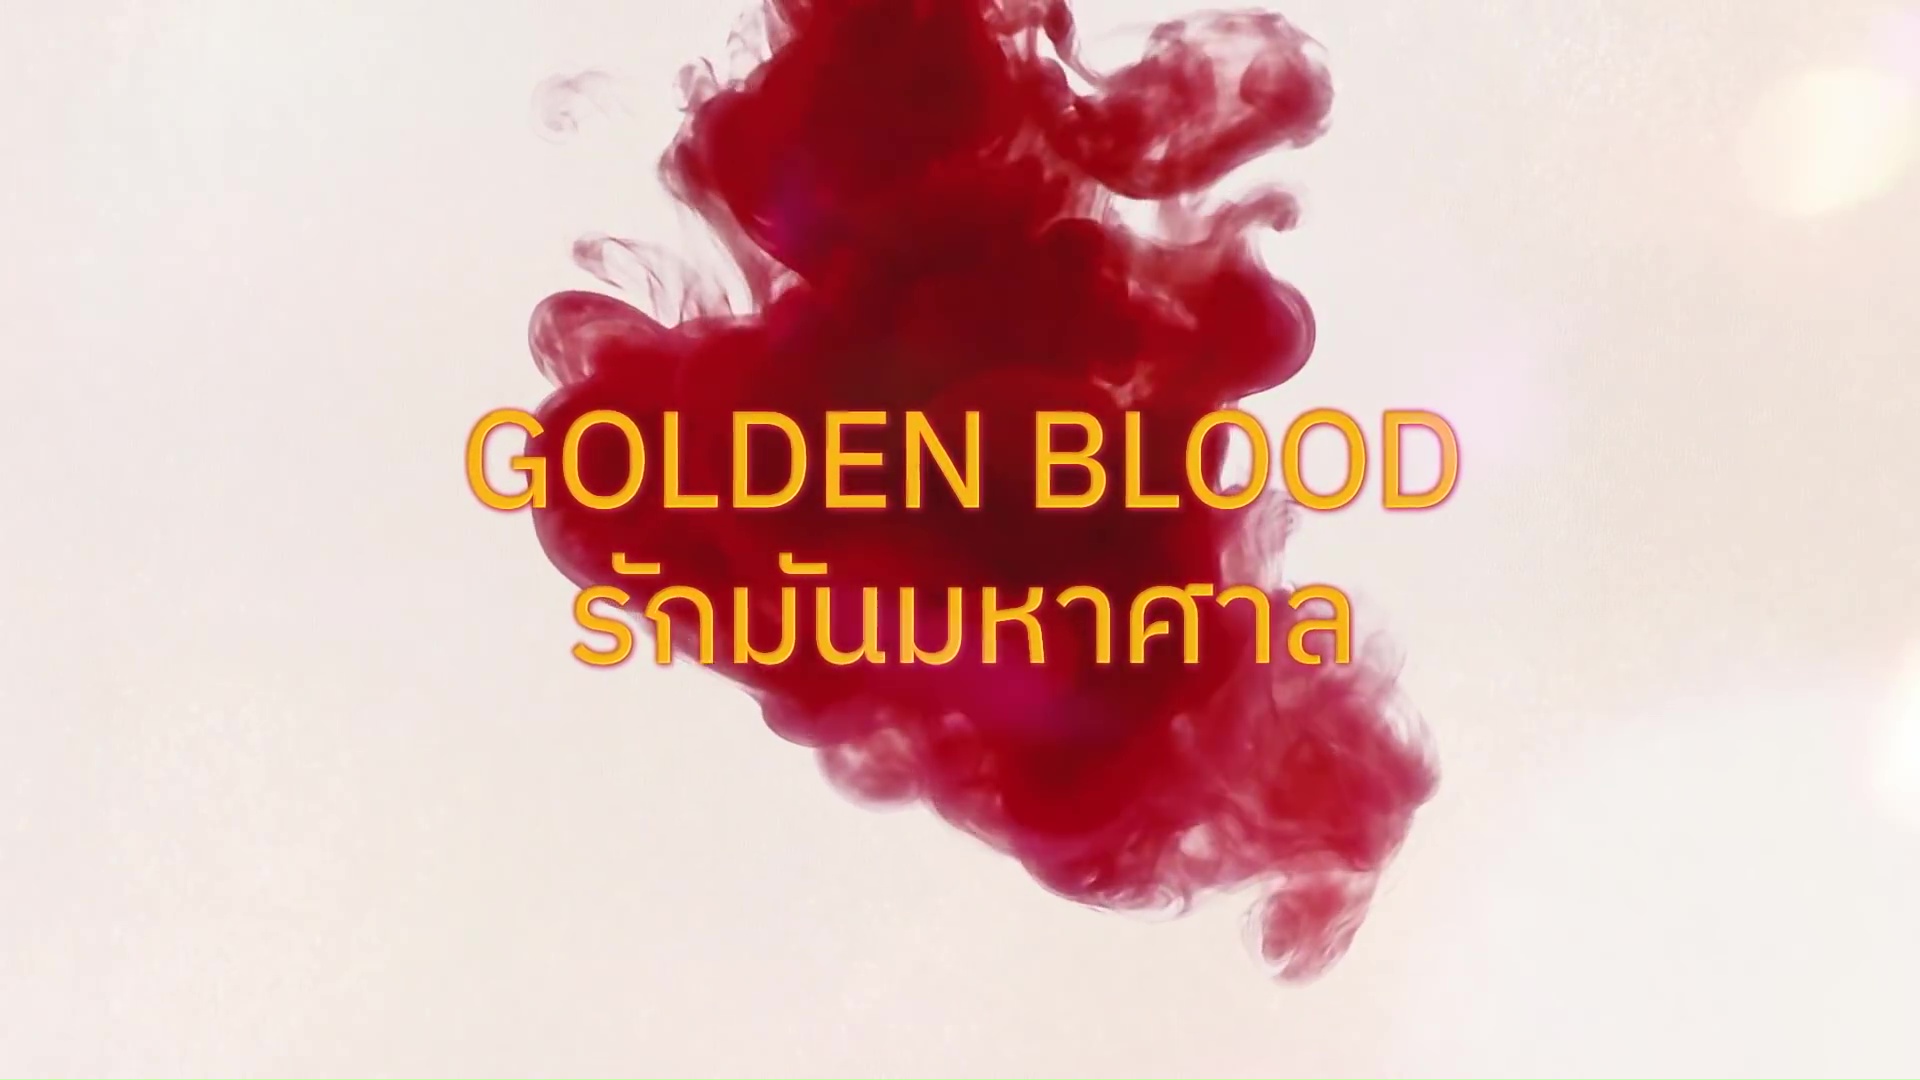 Golden blood the series